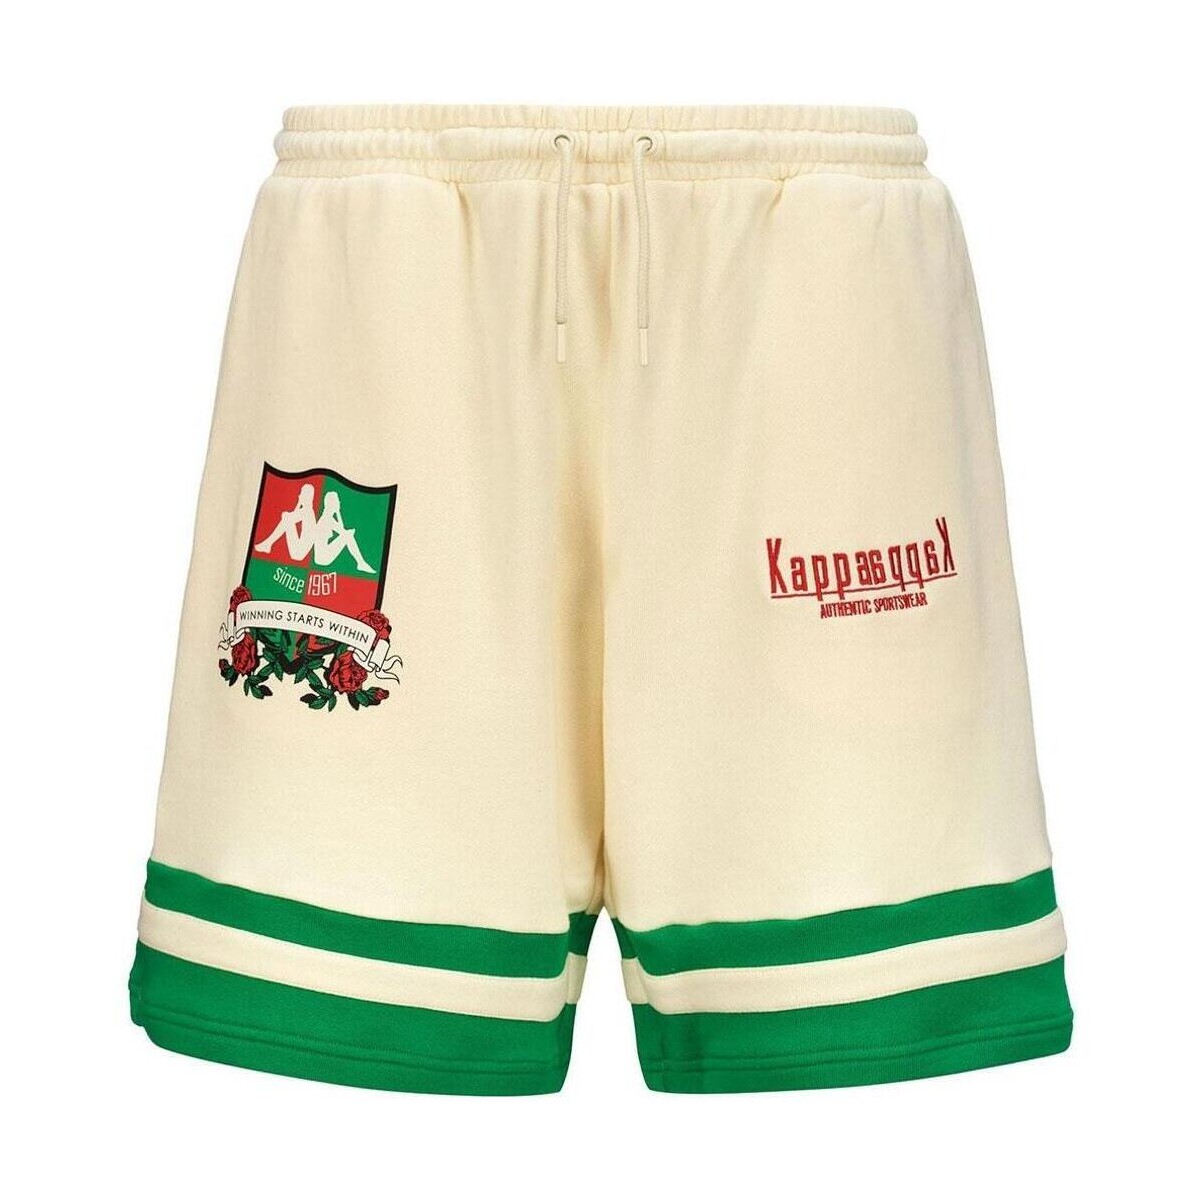 Textil Shorts / Bermudas Kappa  Bege